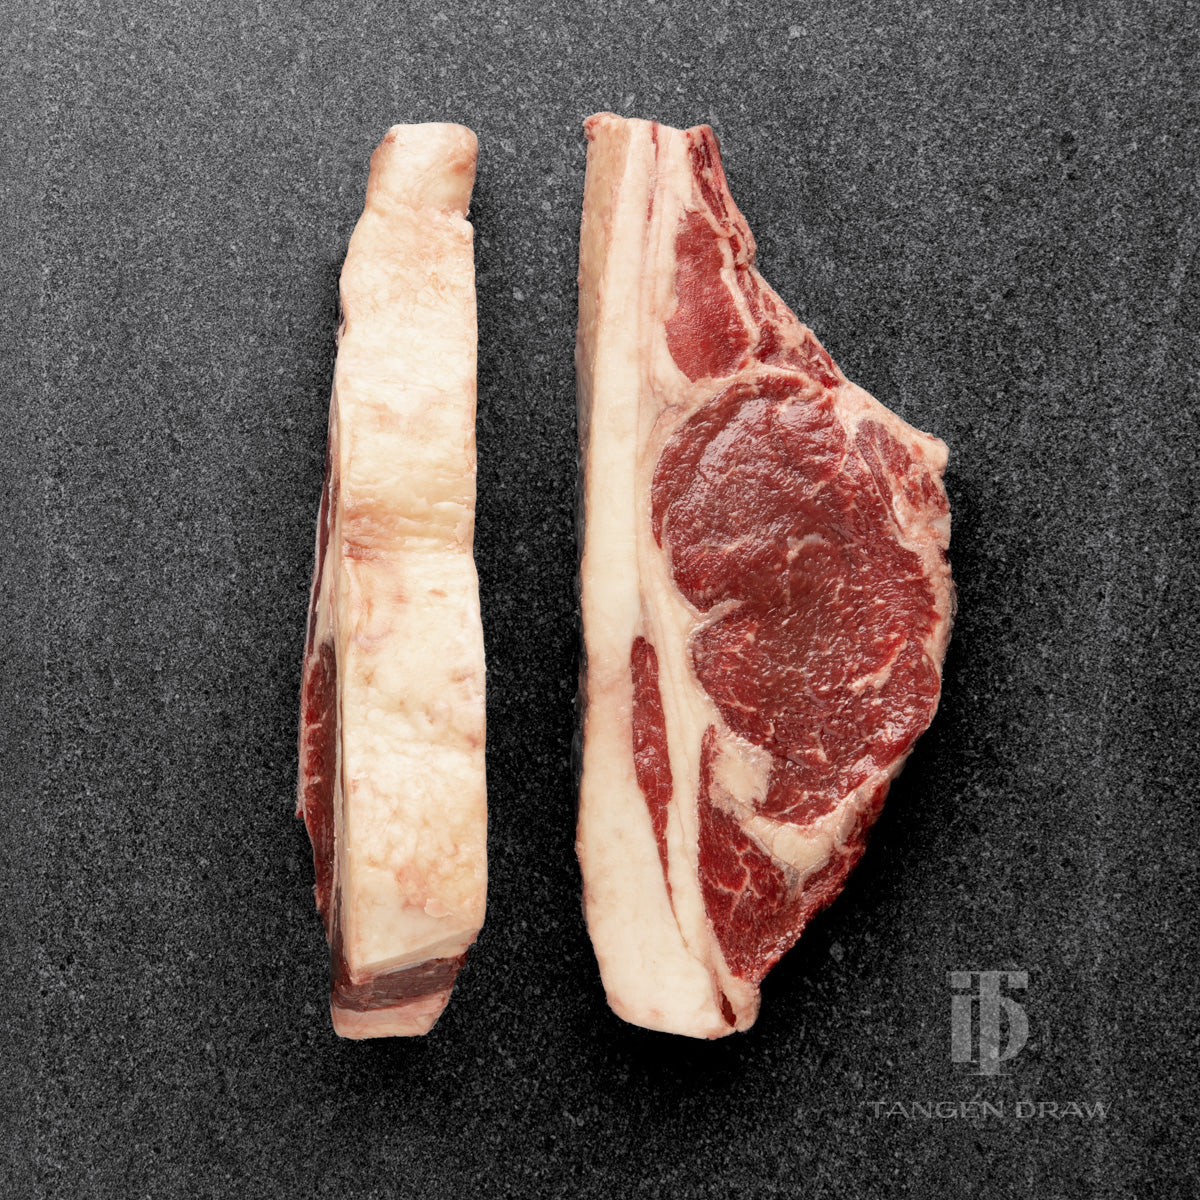 Dry Aged Flank Steak – Tangen Draw